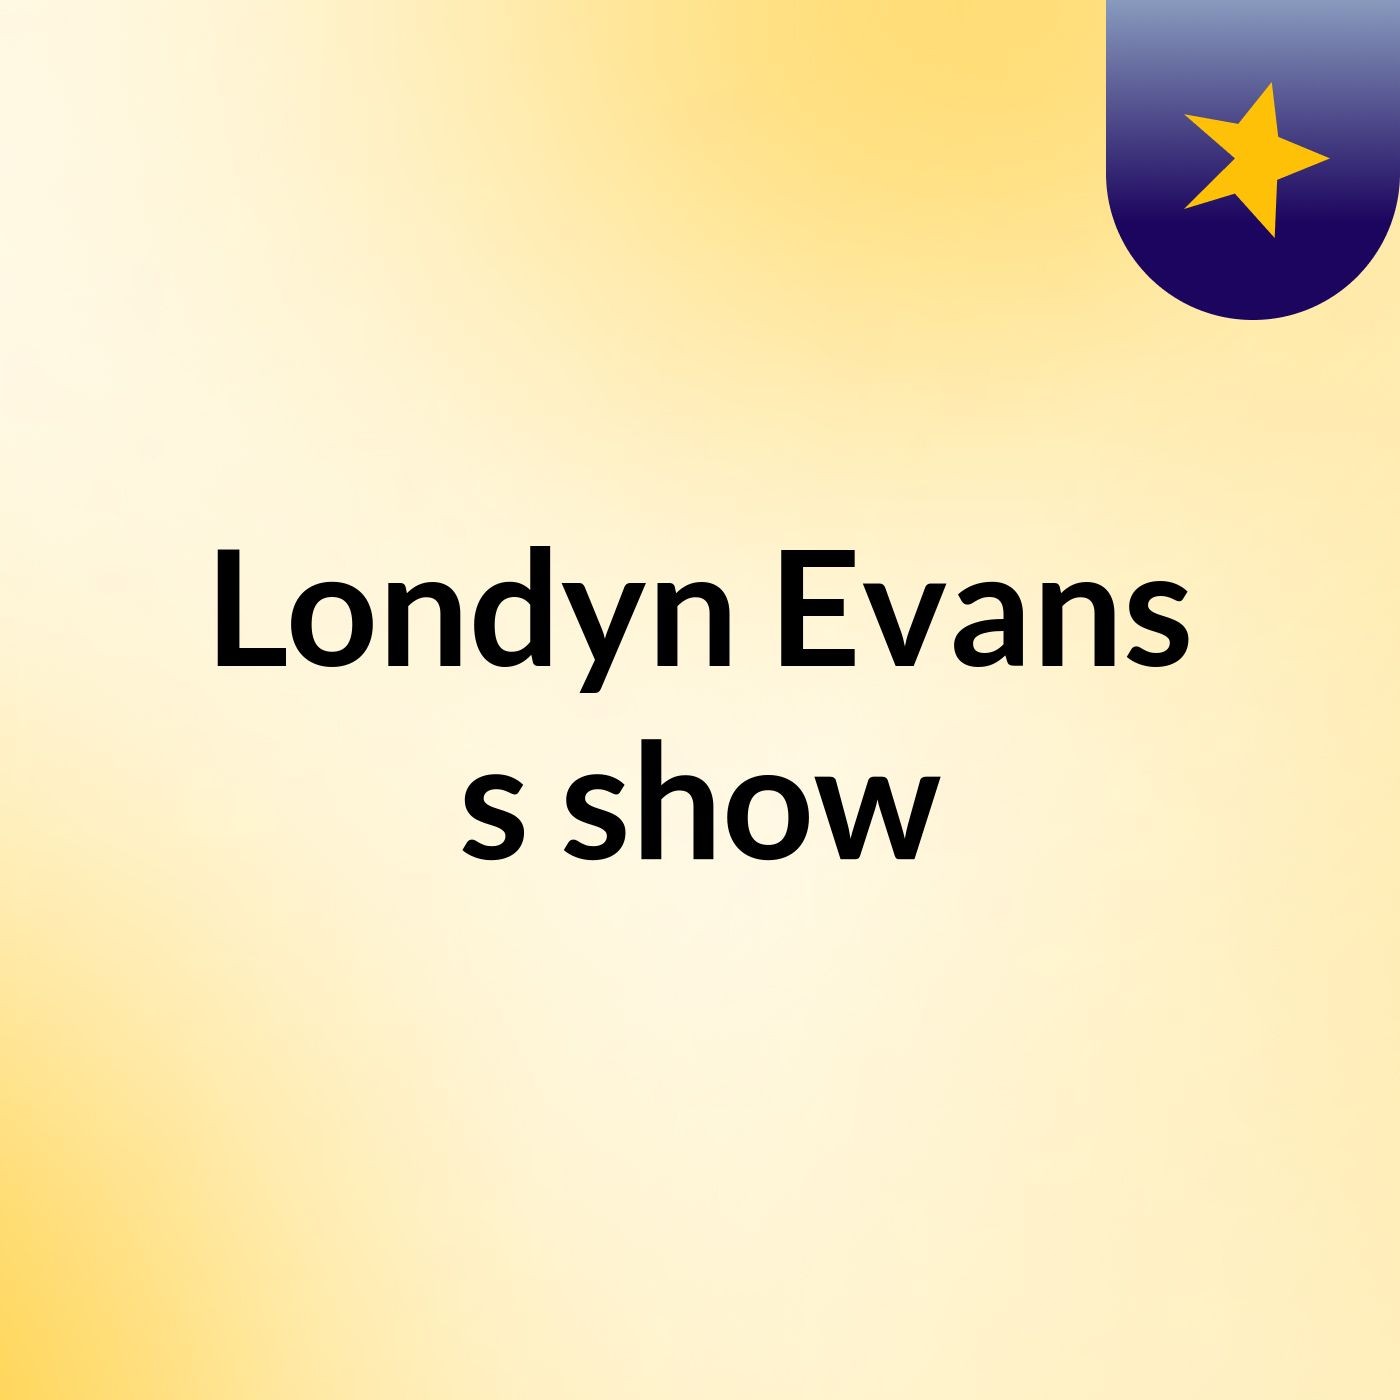 Londyn Evans's show